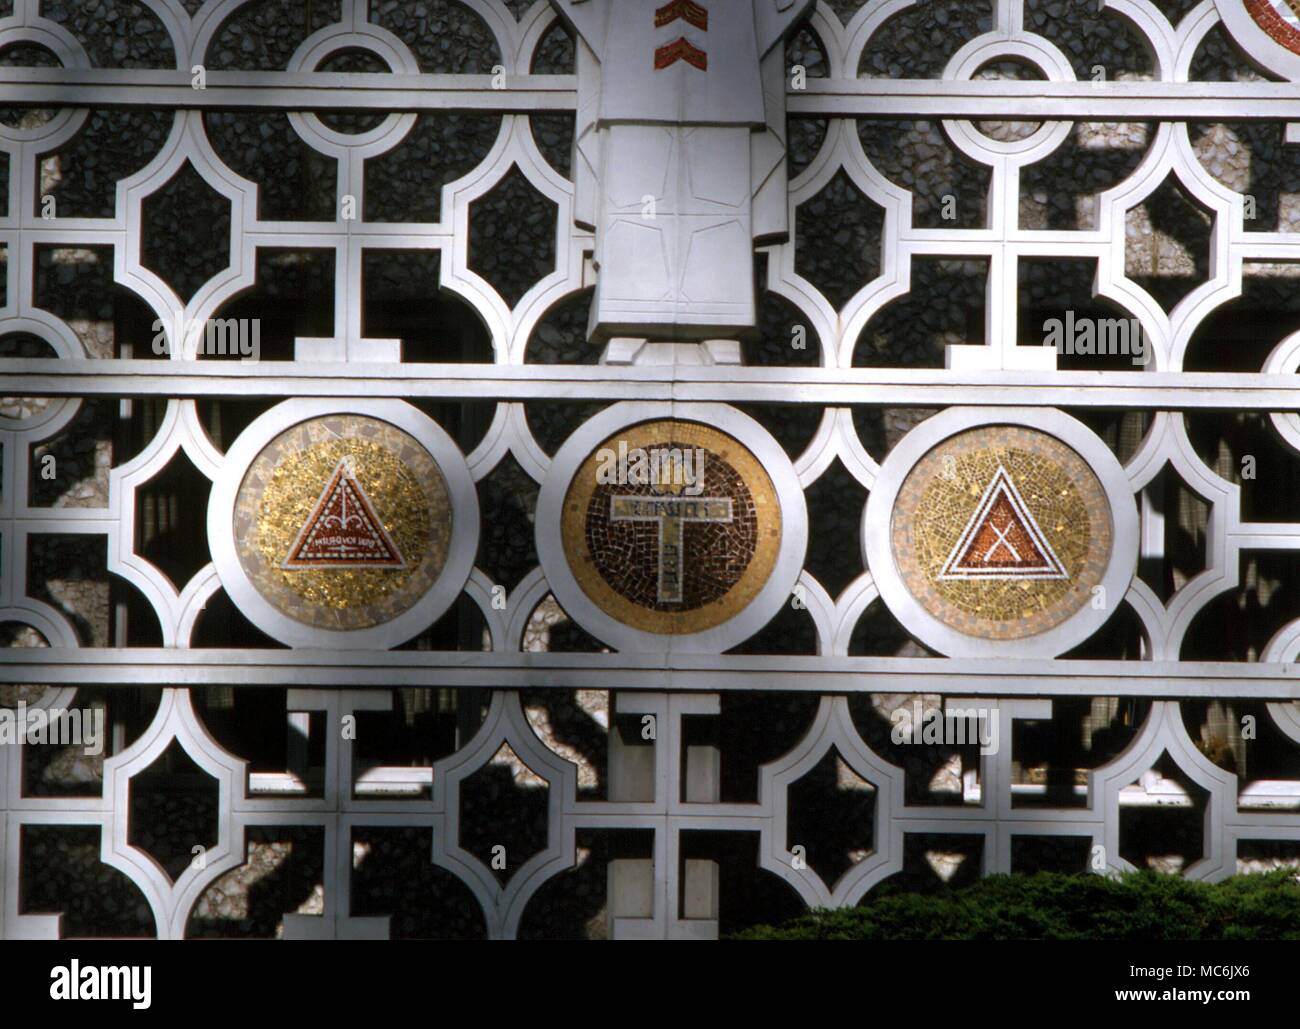 MASONIC SYMBOLS on the protective lattice work screening around the facade of the Masonic (Scottish Rites) Temple in San Francisco Stock Photo